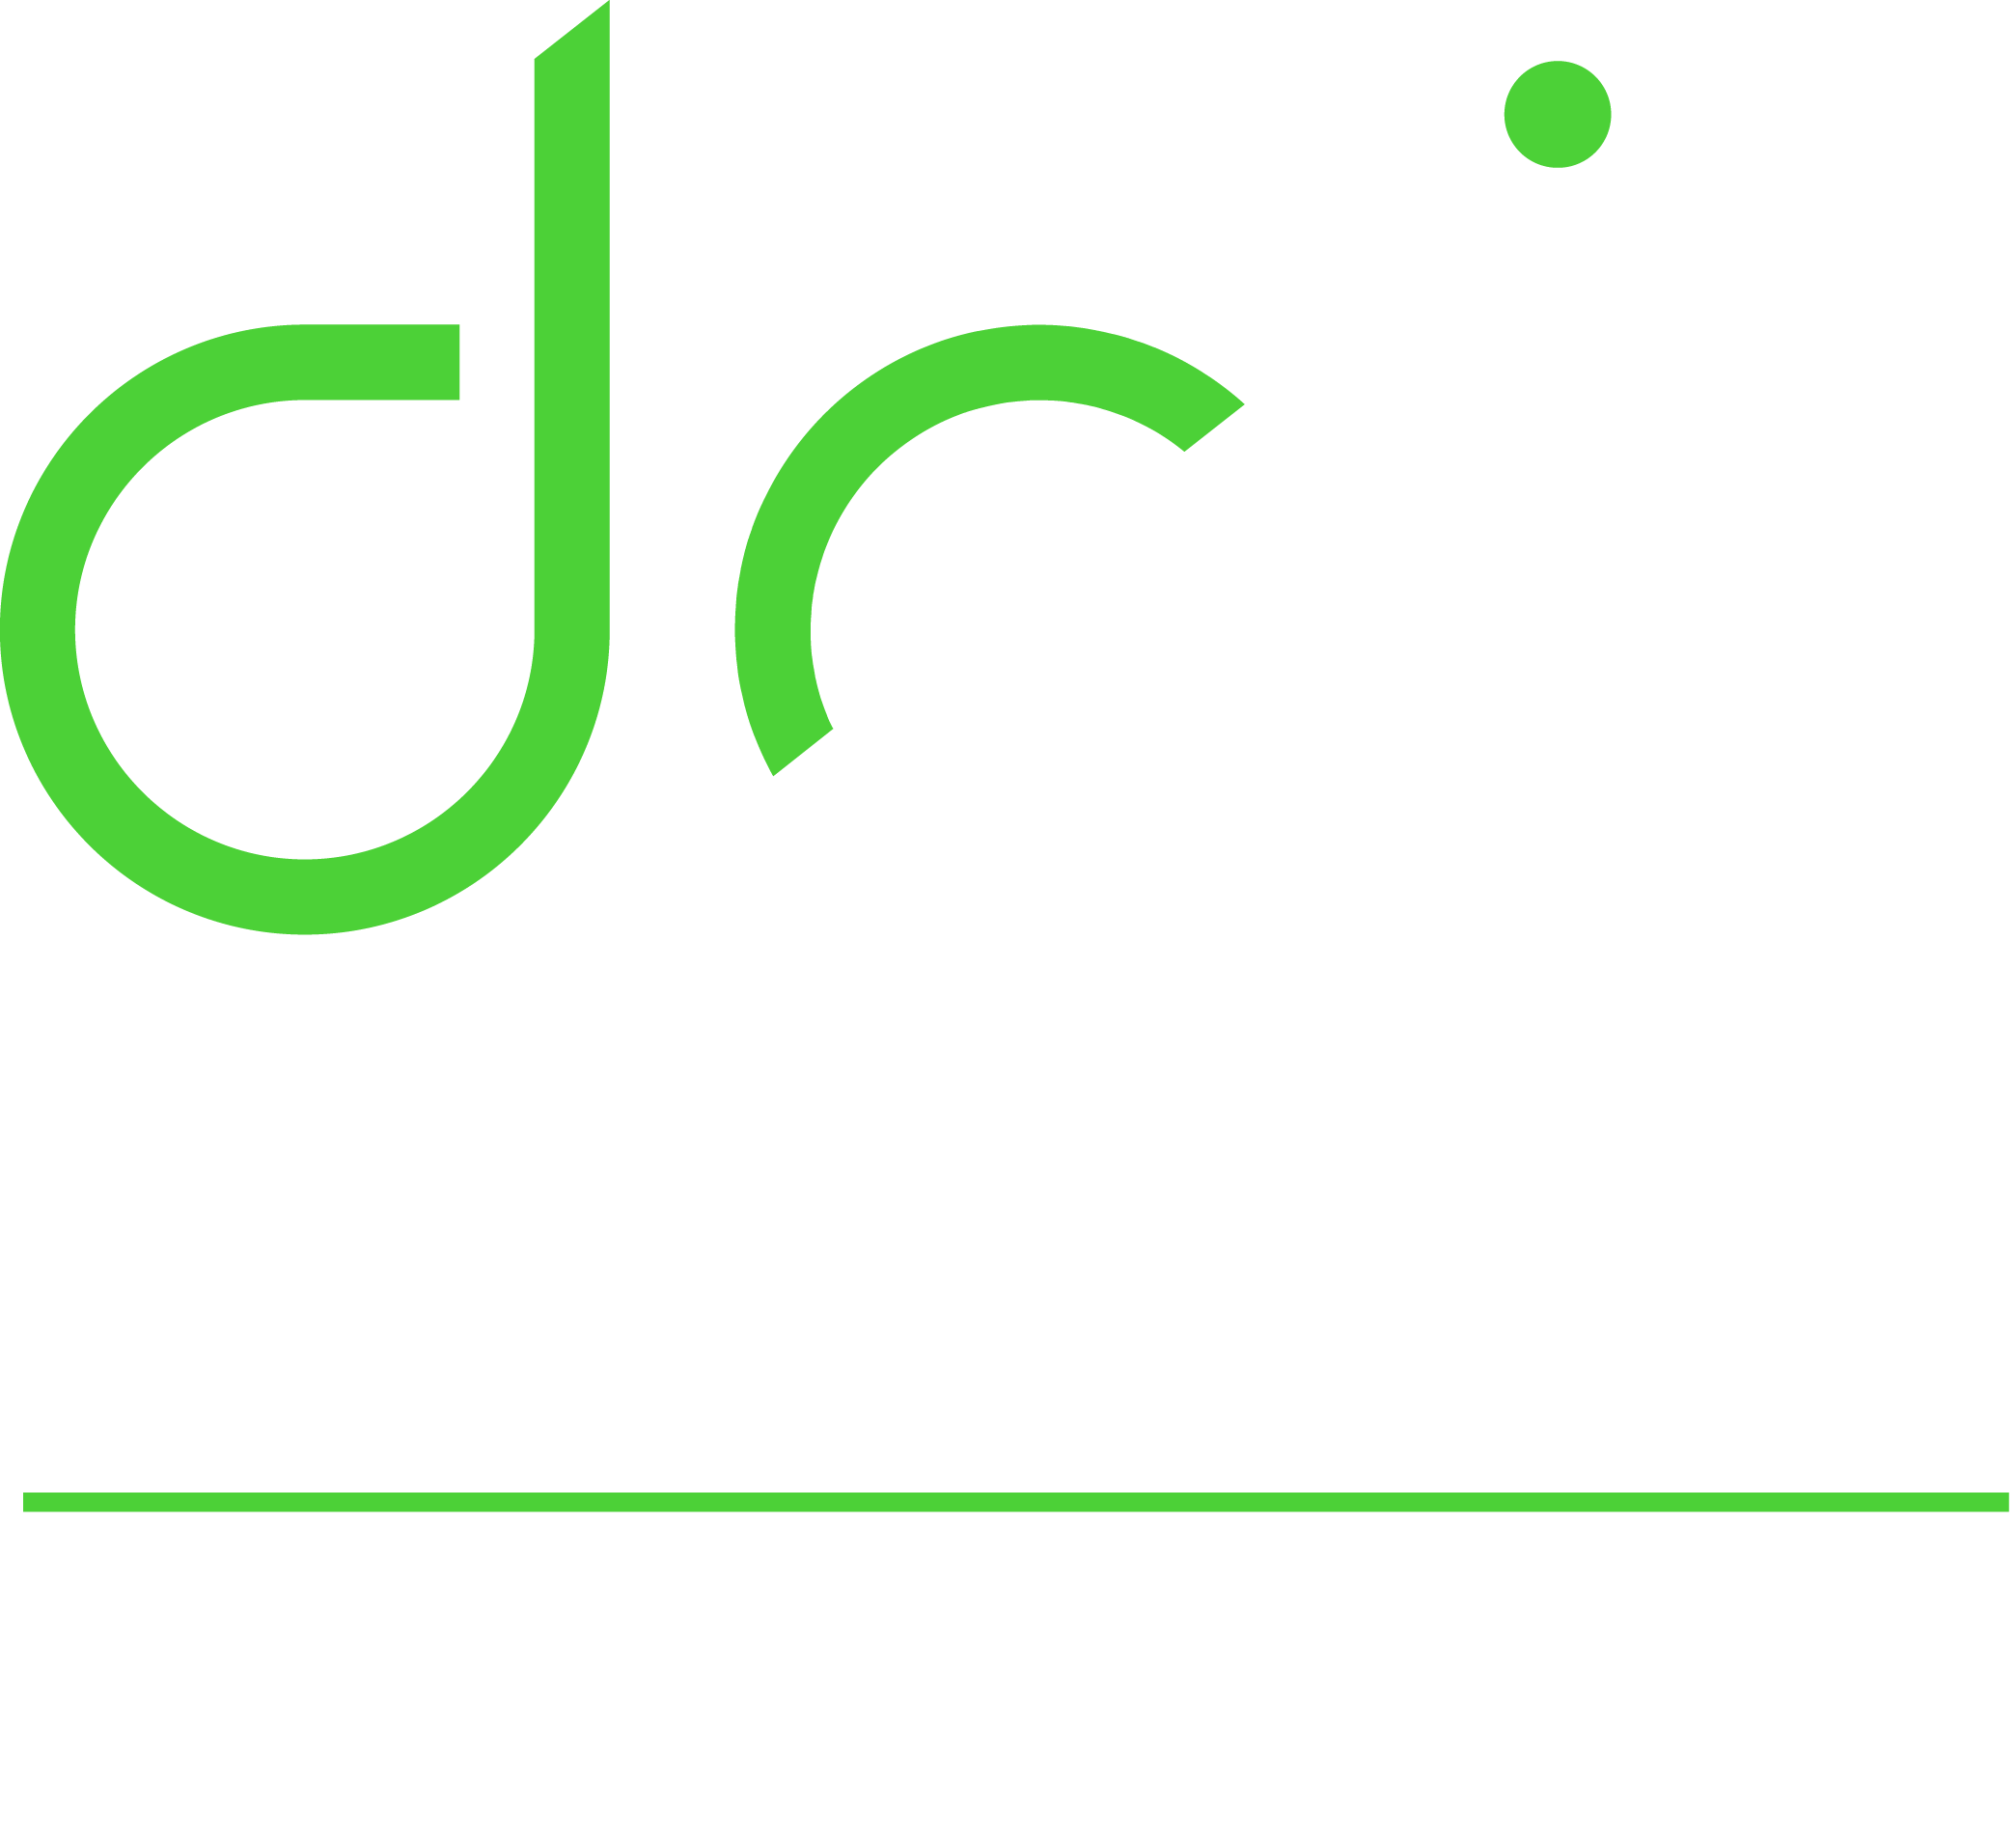 Doit Systems